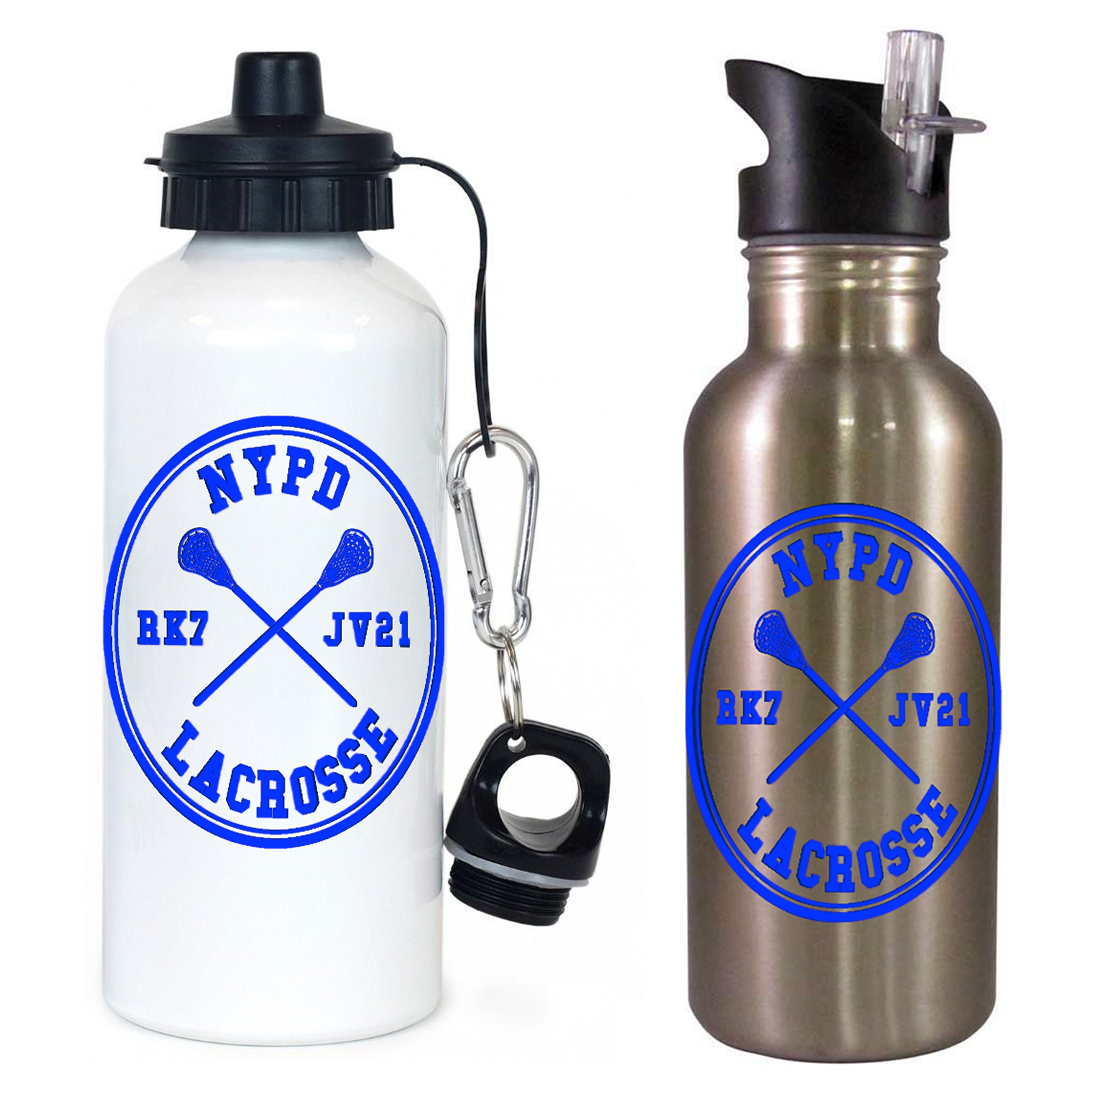 NYPD Lacrosse Team Water Bottle